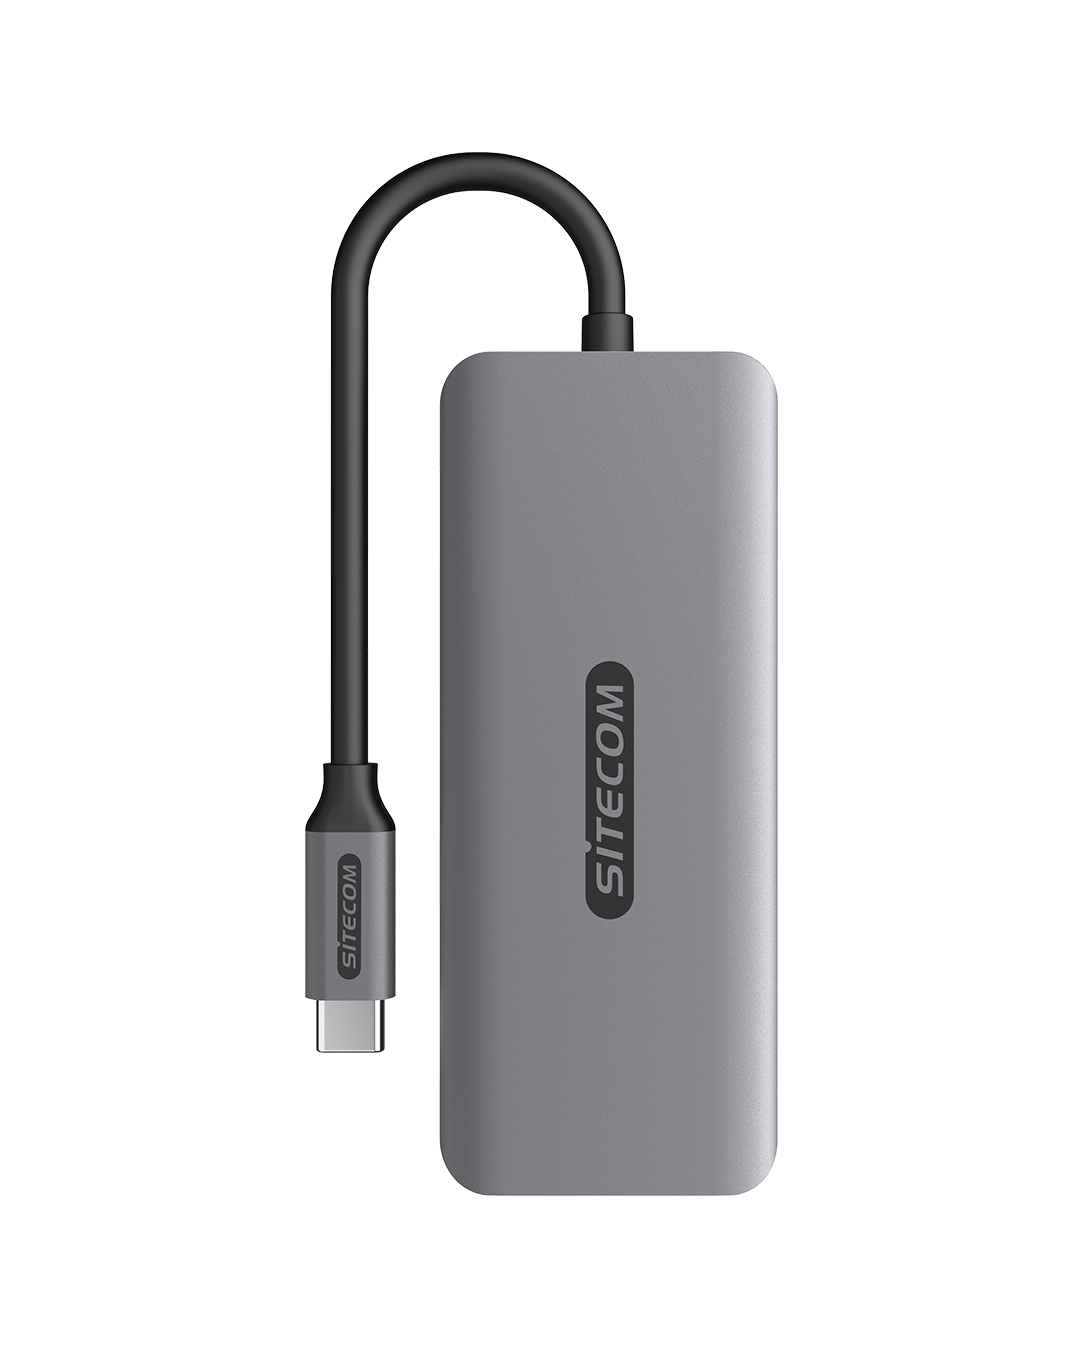 Sitecom - 6 in 1 USB-C LAN Multiport Adapter - CN-5503